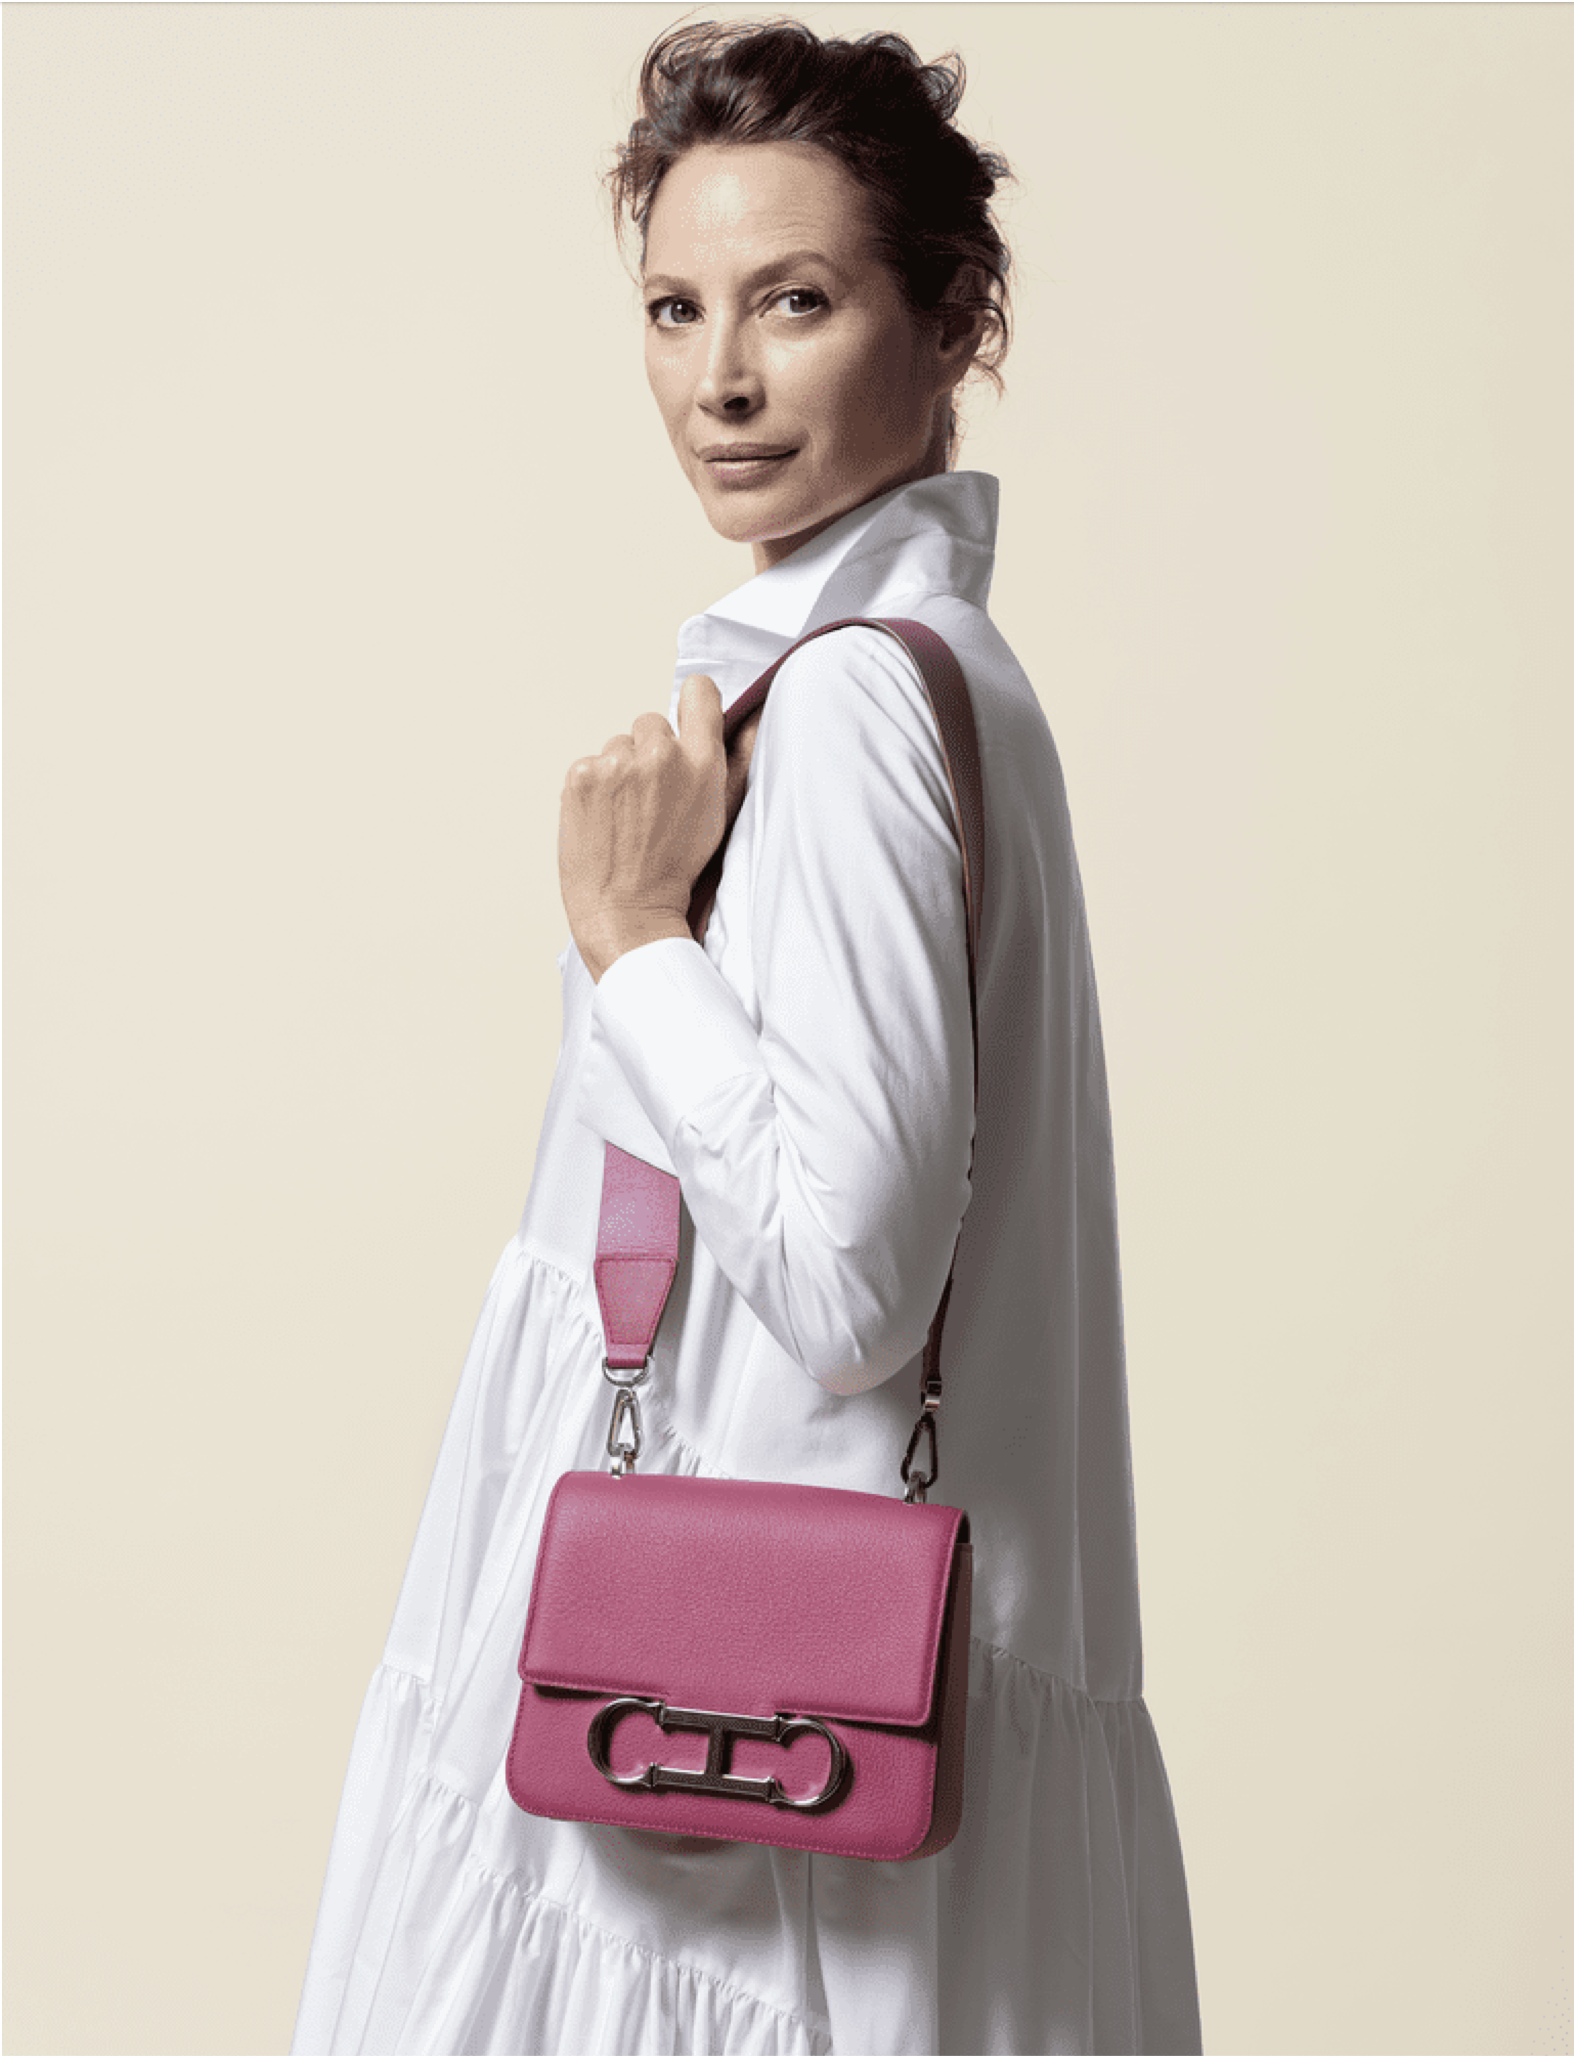 Carolina Herrera Initials Insignia Satchel in Pink - Queen Letizia Handbags  - Queen Letizia Style